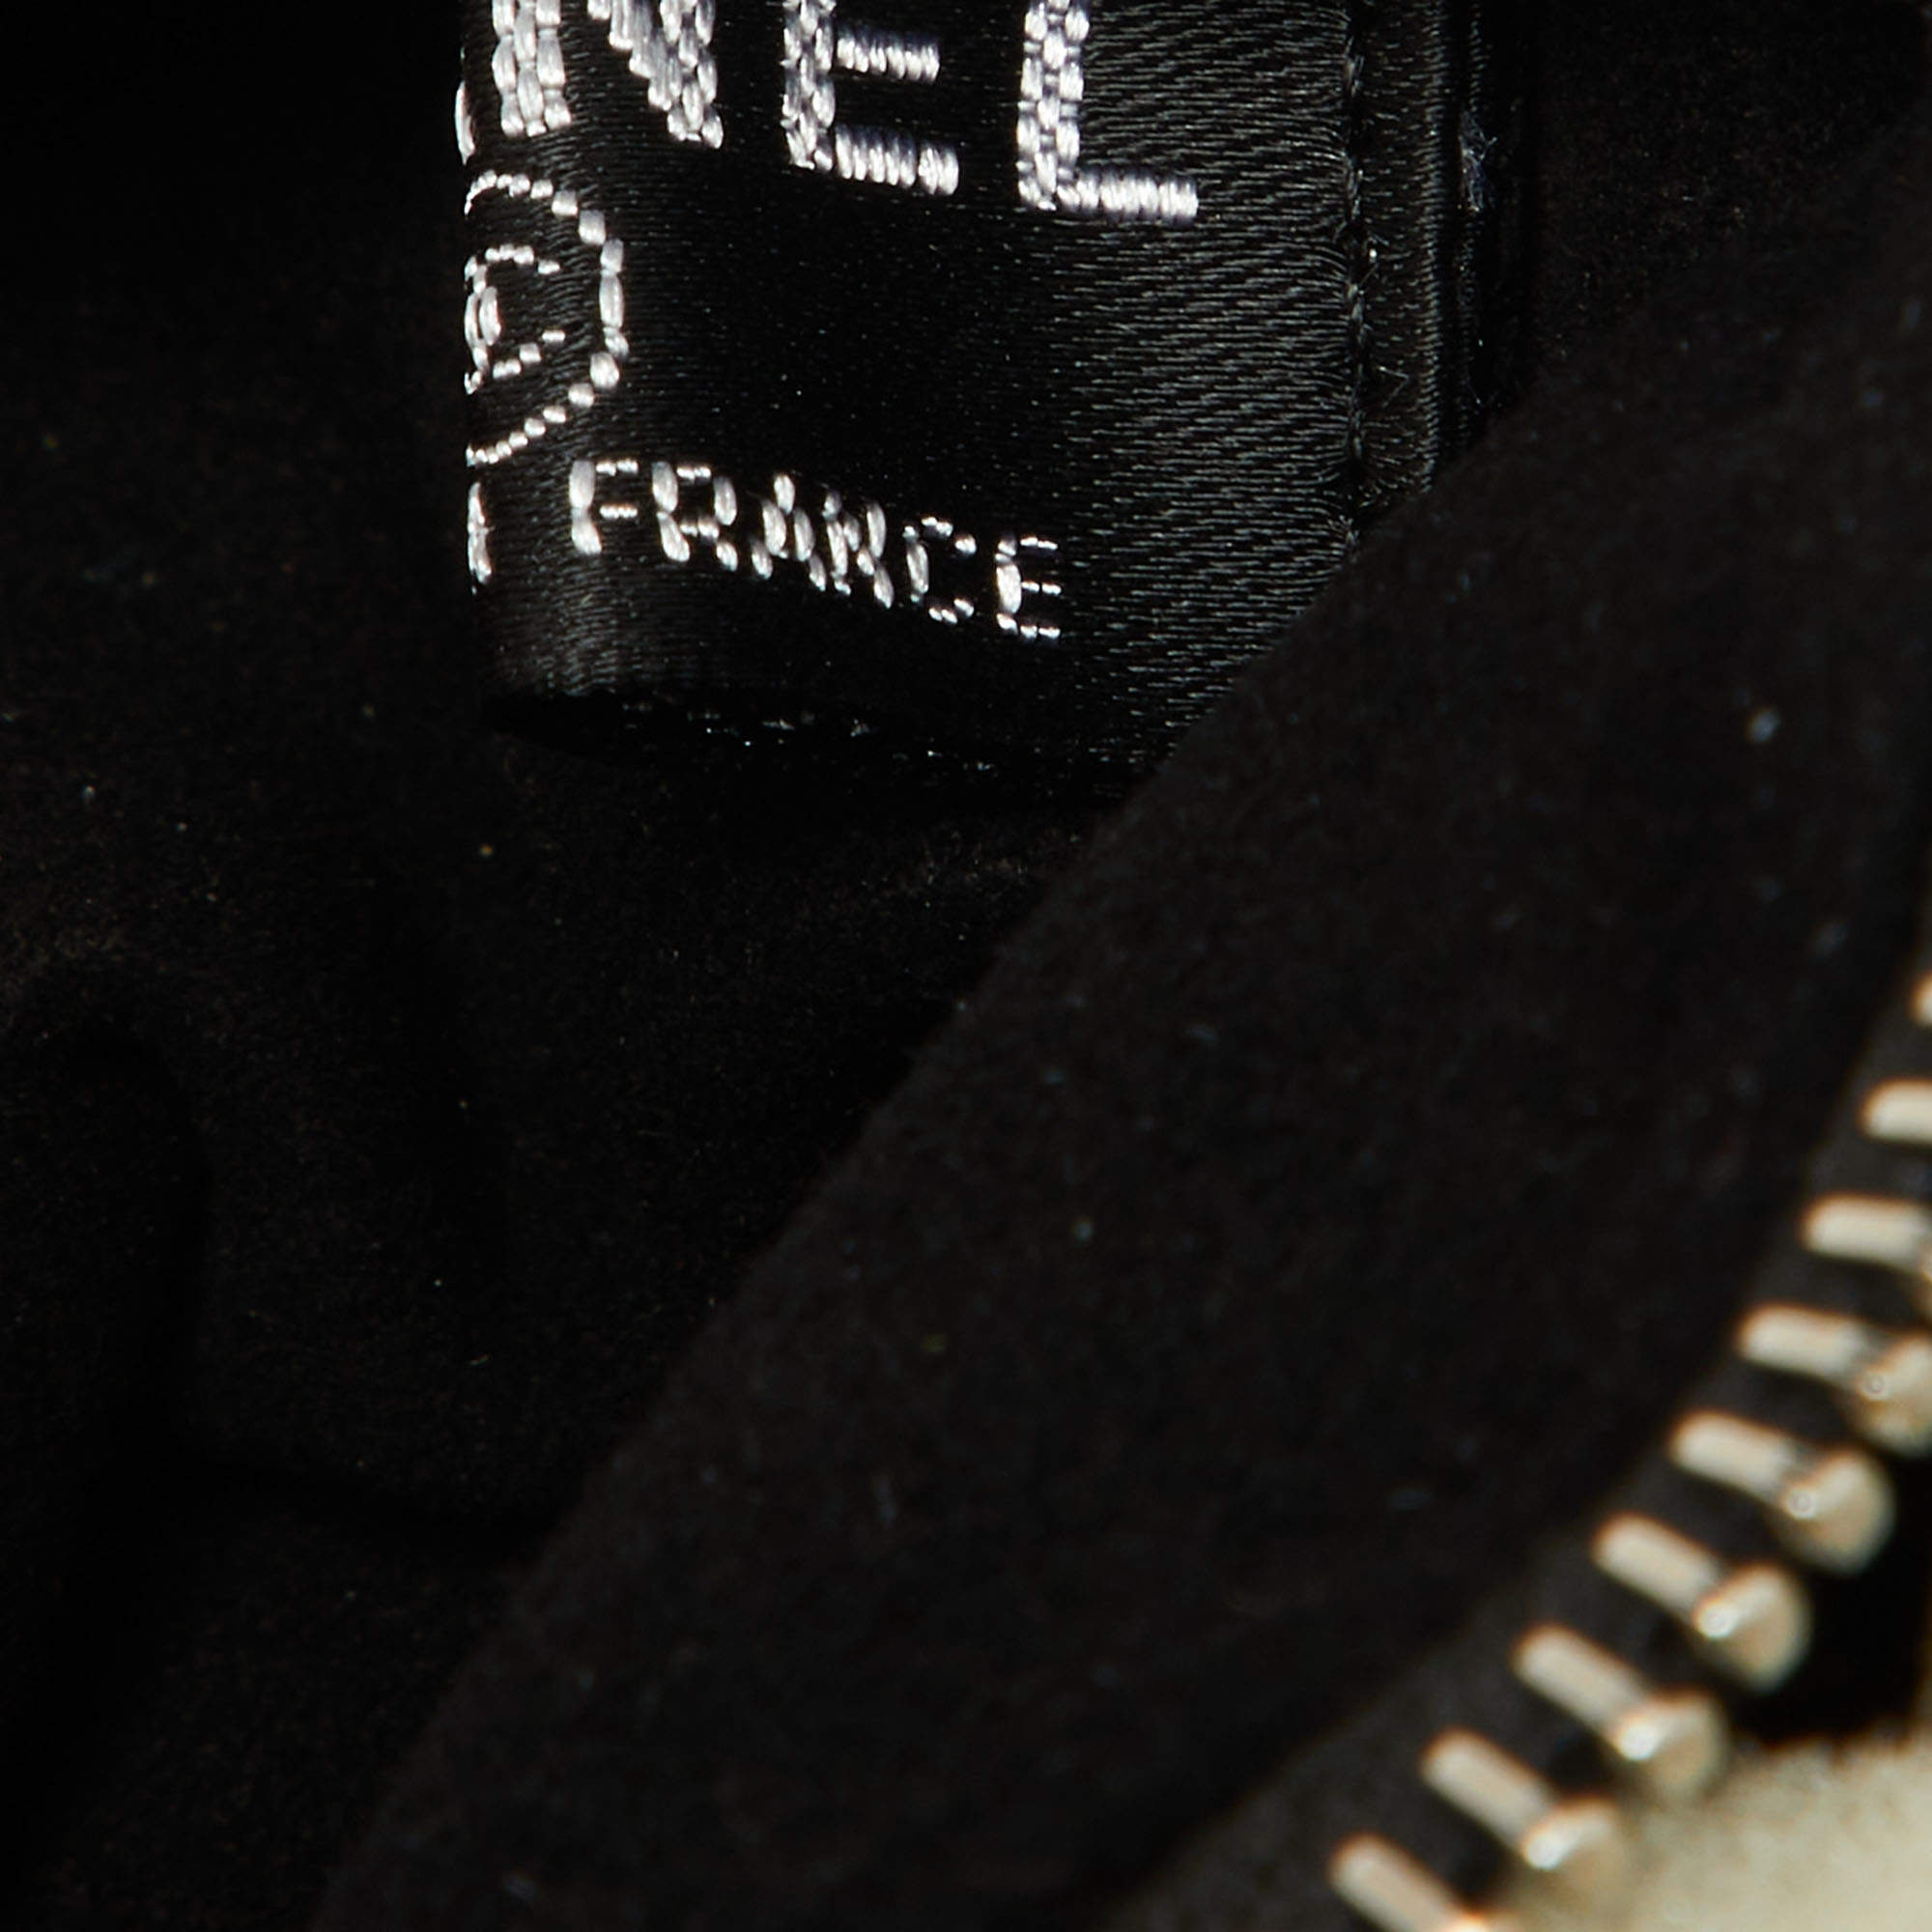 Brand New Chanel FW2020 Interlocking C Logo Leather Fingerless Gloves